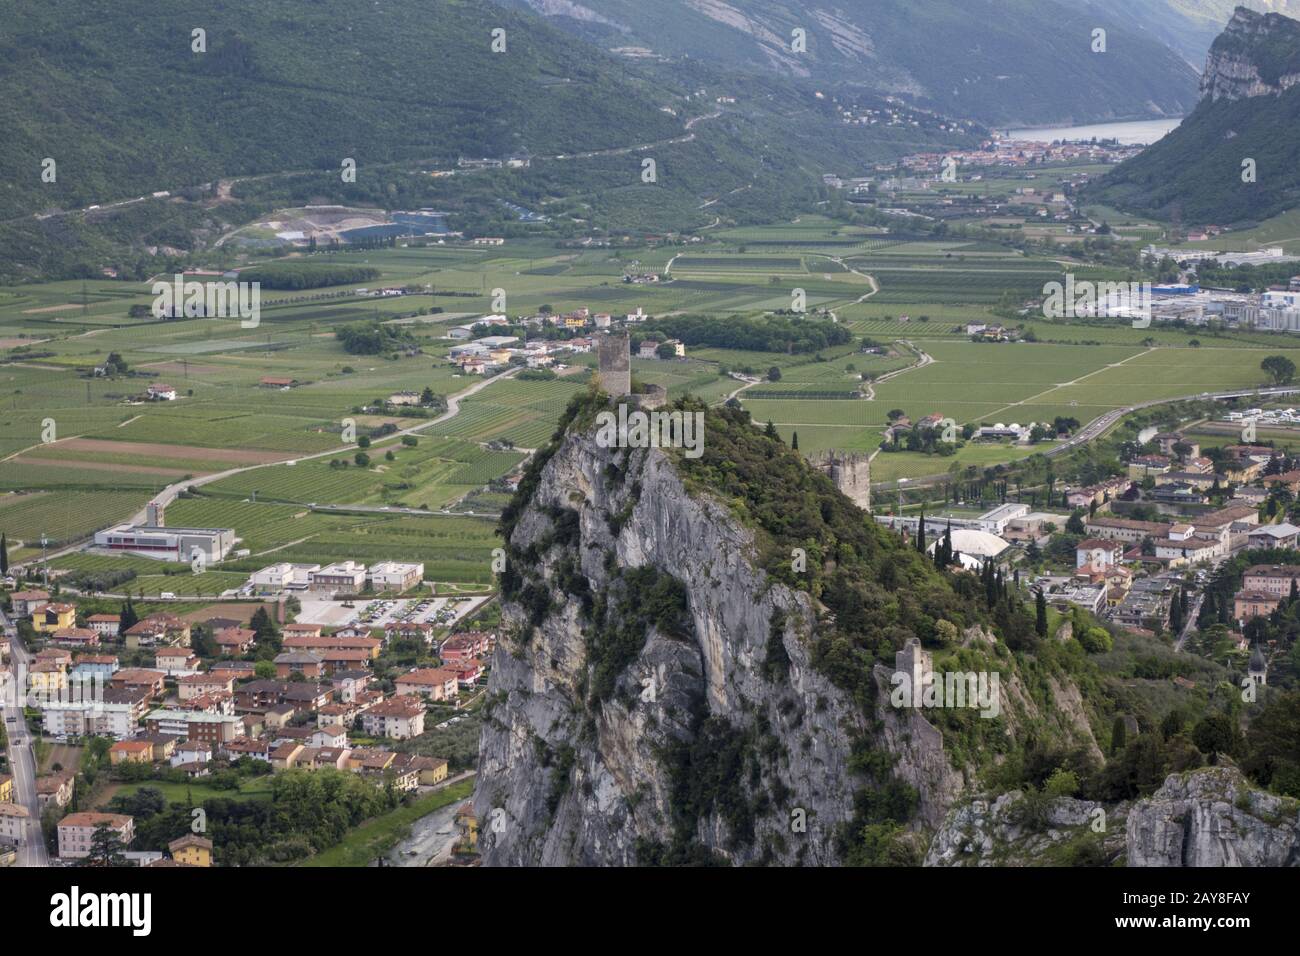 Burg von Arco in Trentino Italien Foto Stock